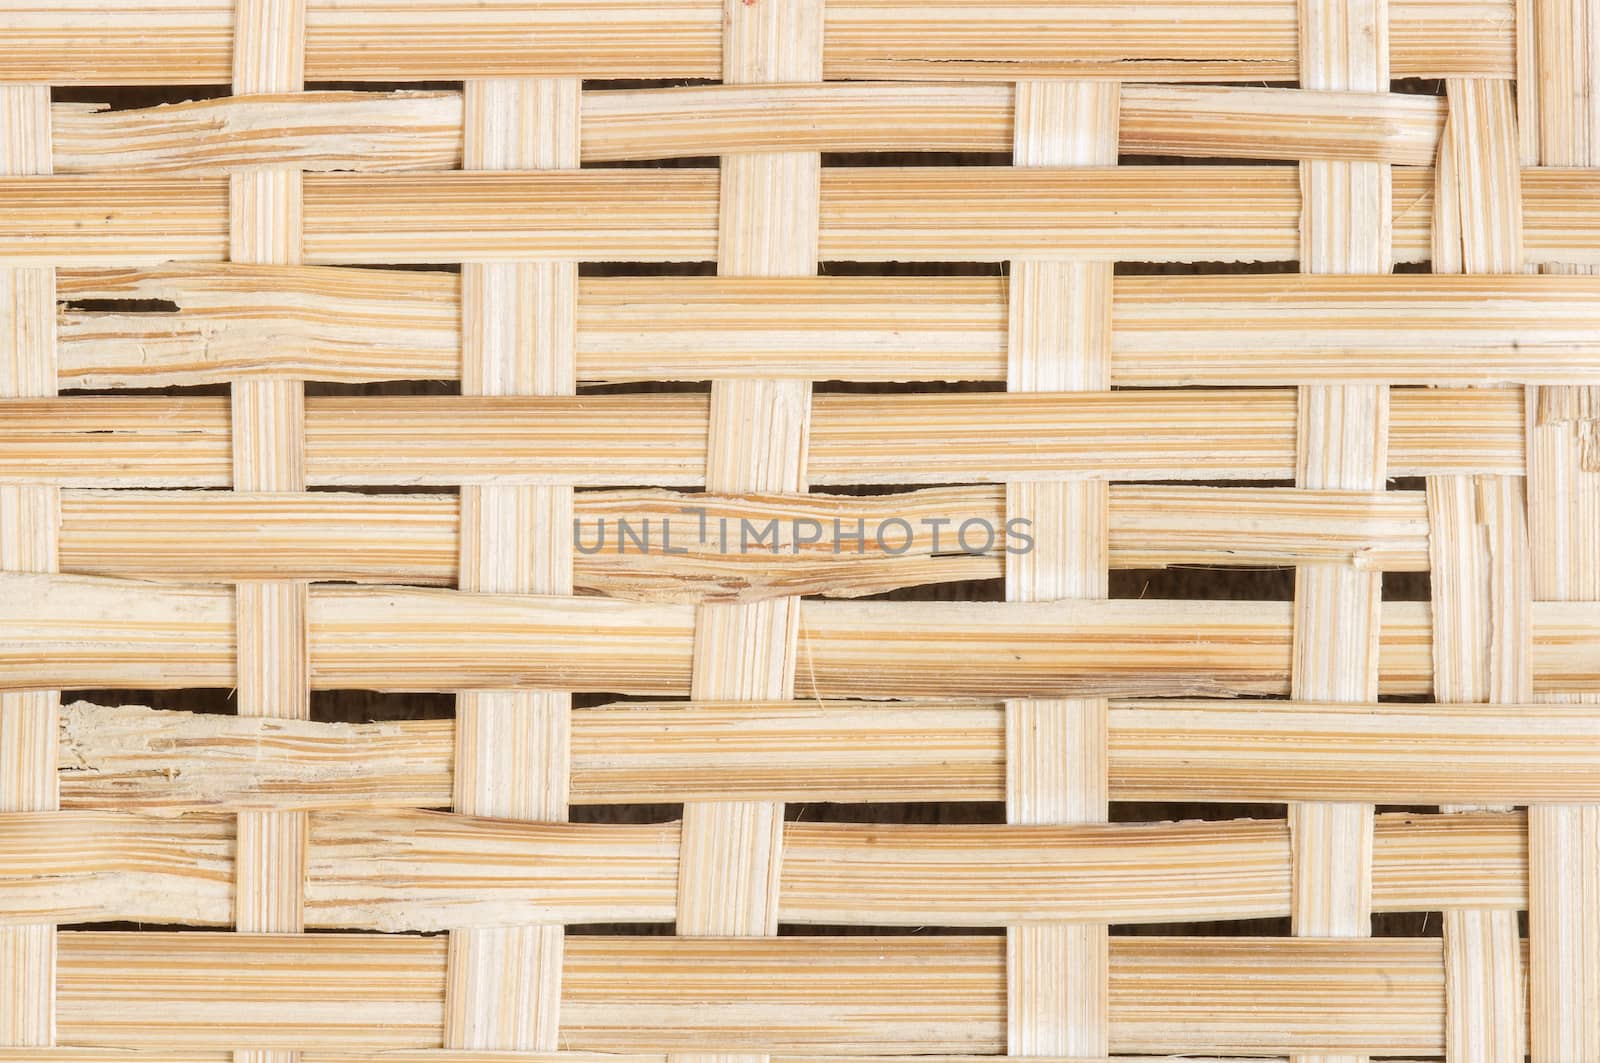 Bamboo pattern by seksan44